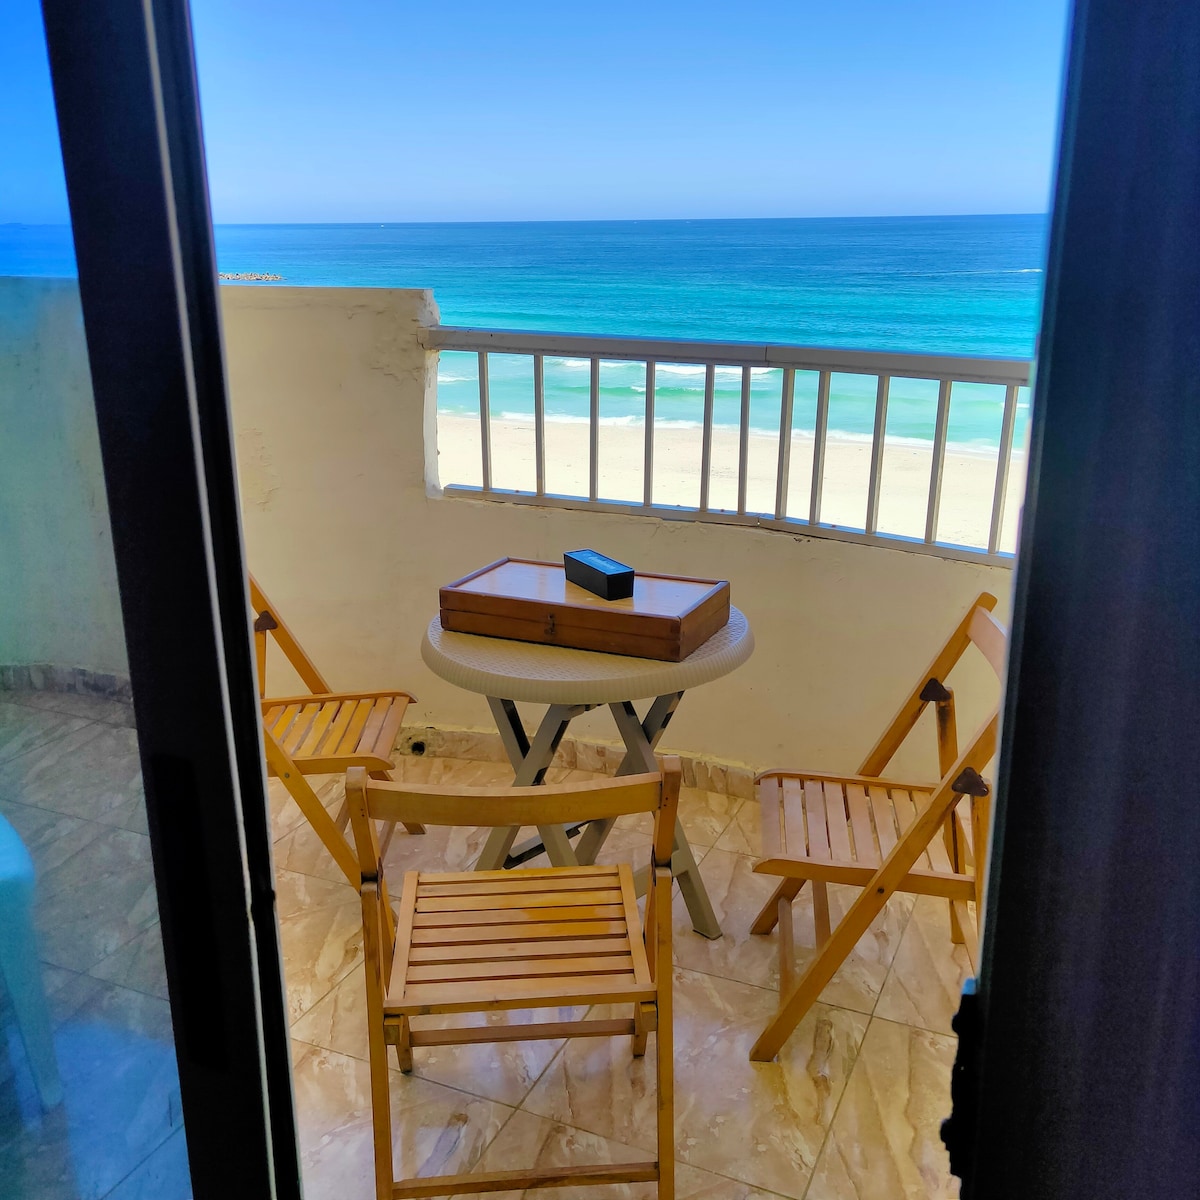 Flores casas de playa
Dream stay with terrace